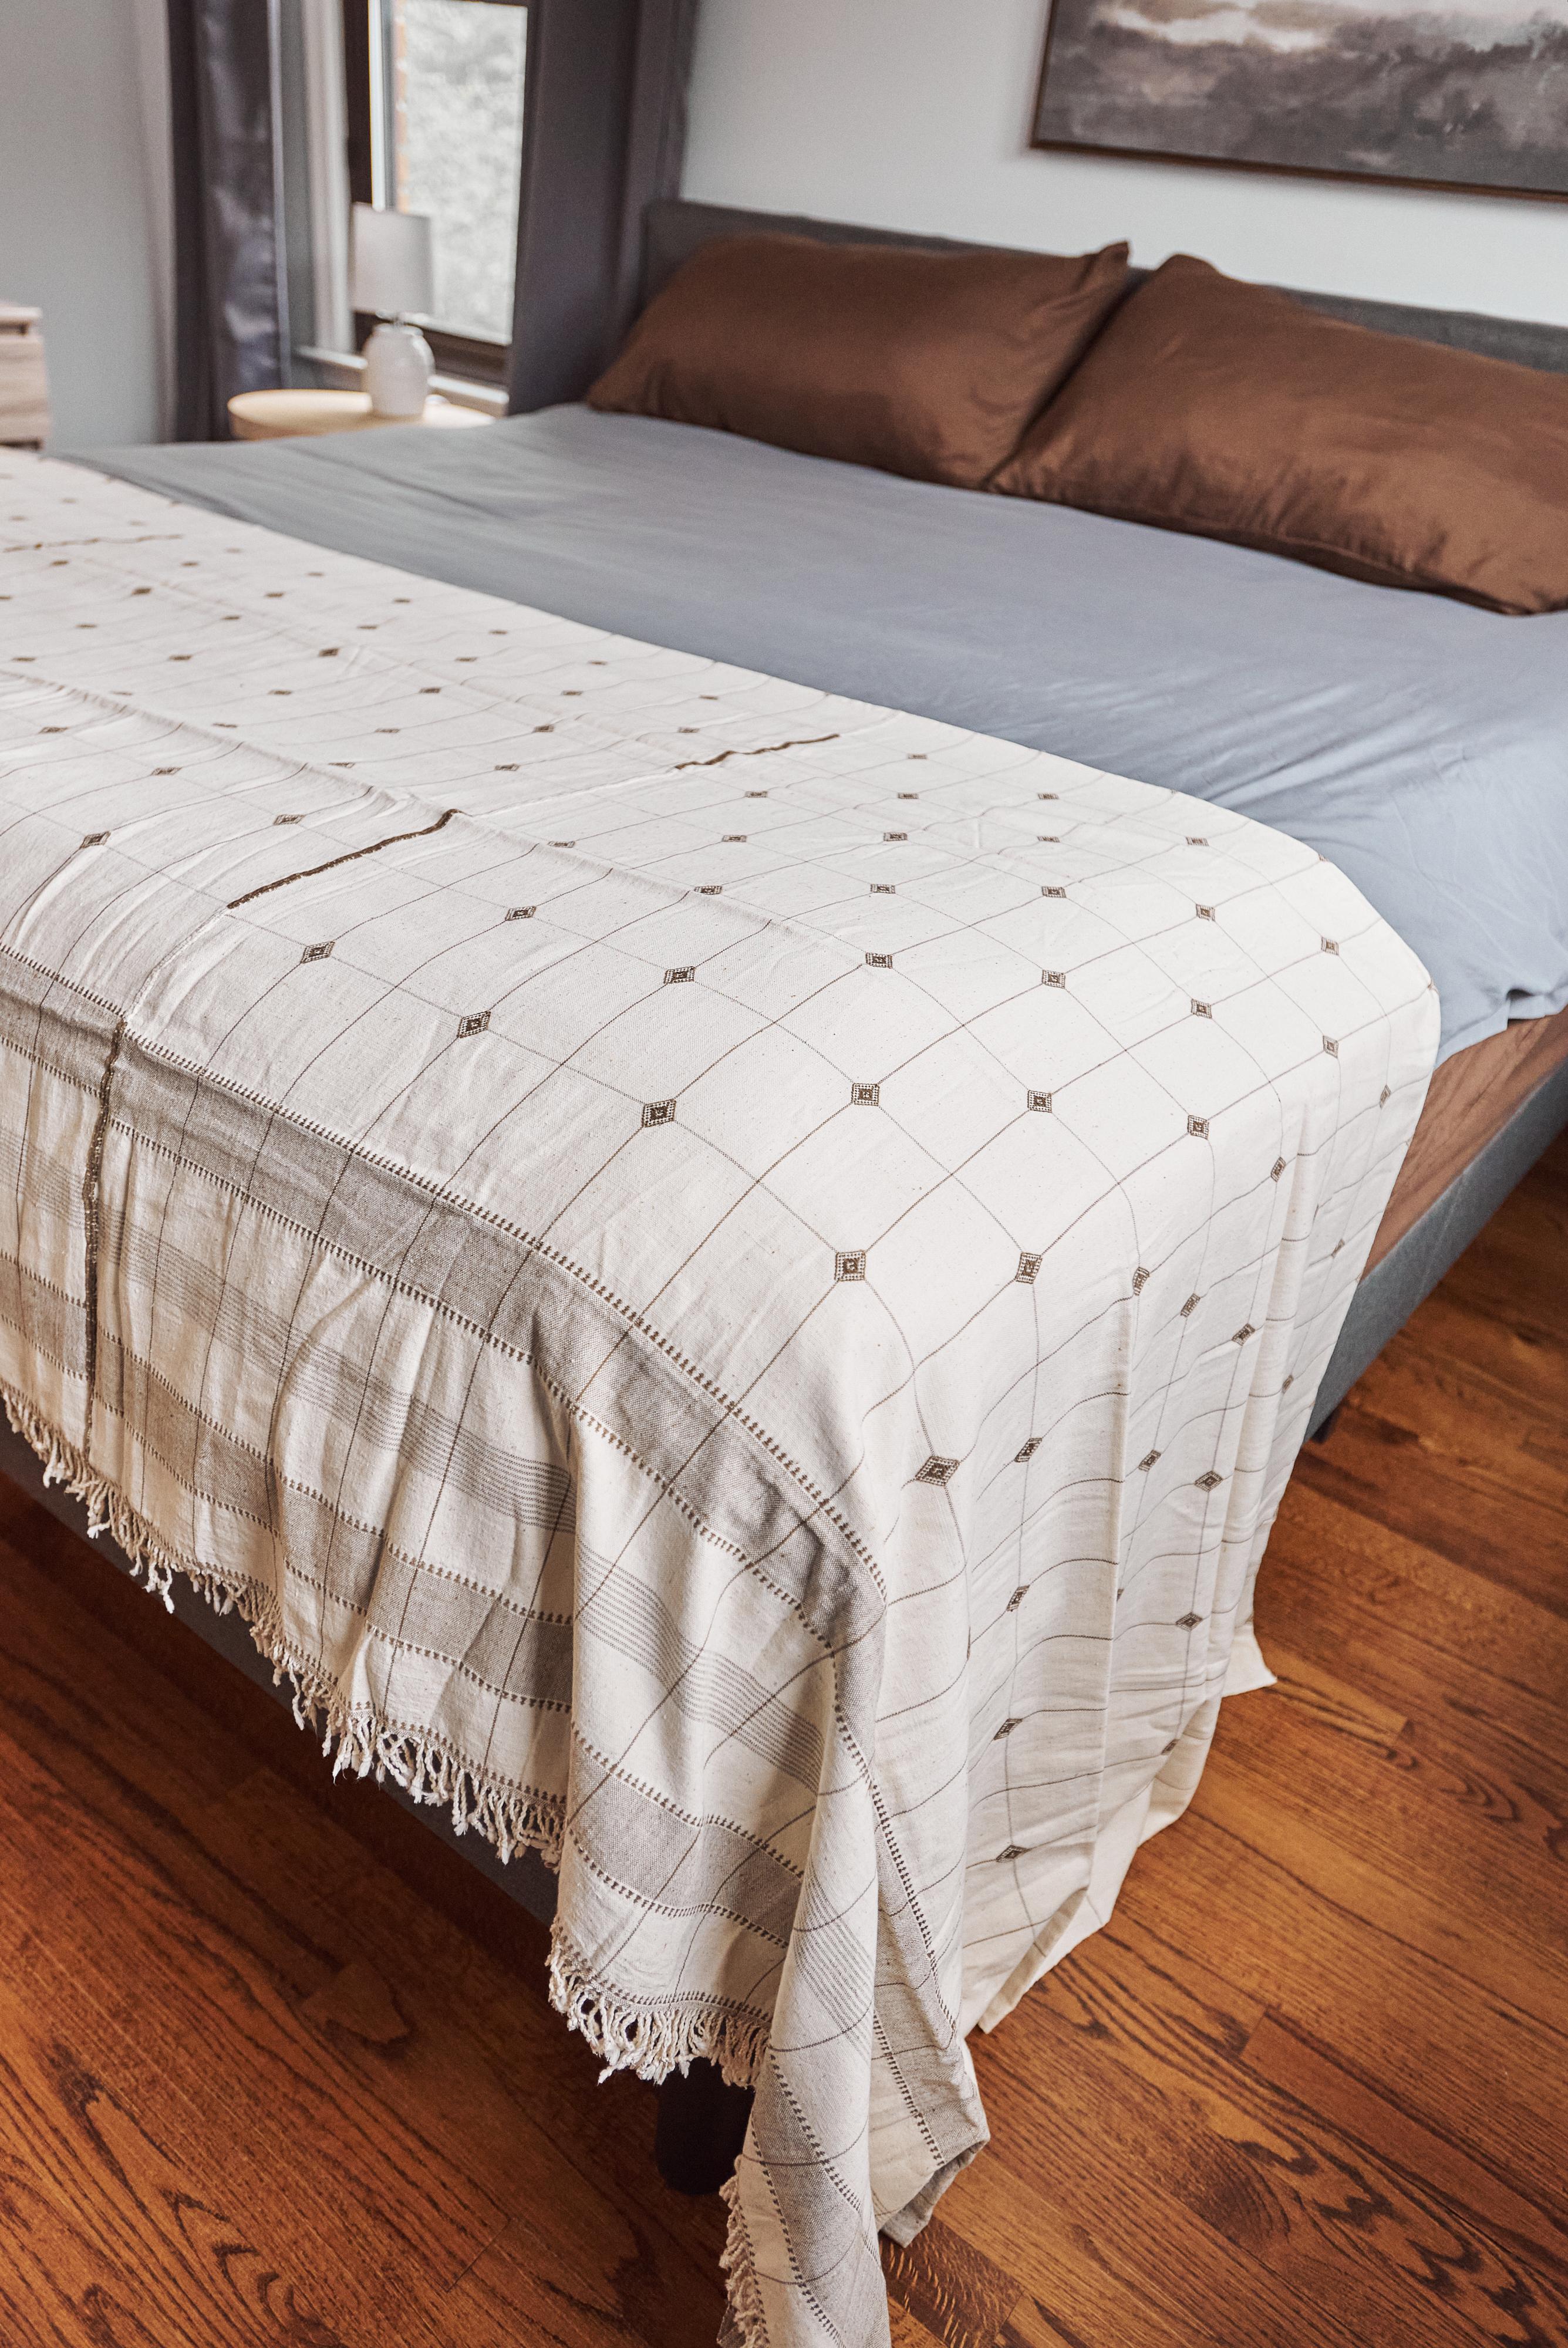 Indien Mool Handloom King Size Bedpsread Coverlet Black & White, in Organic Cotton (en coton biologique) en vente